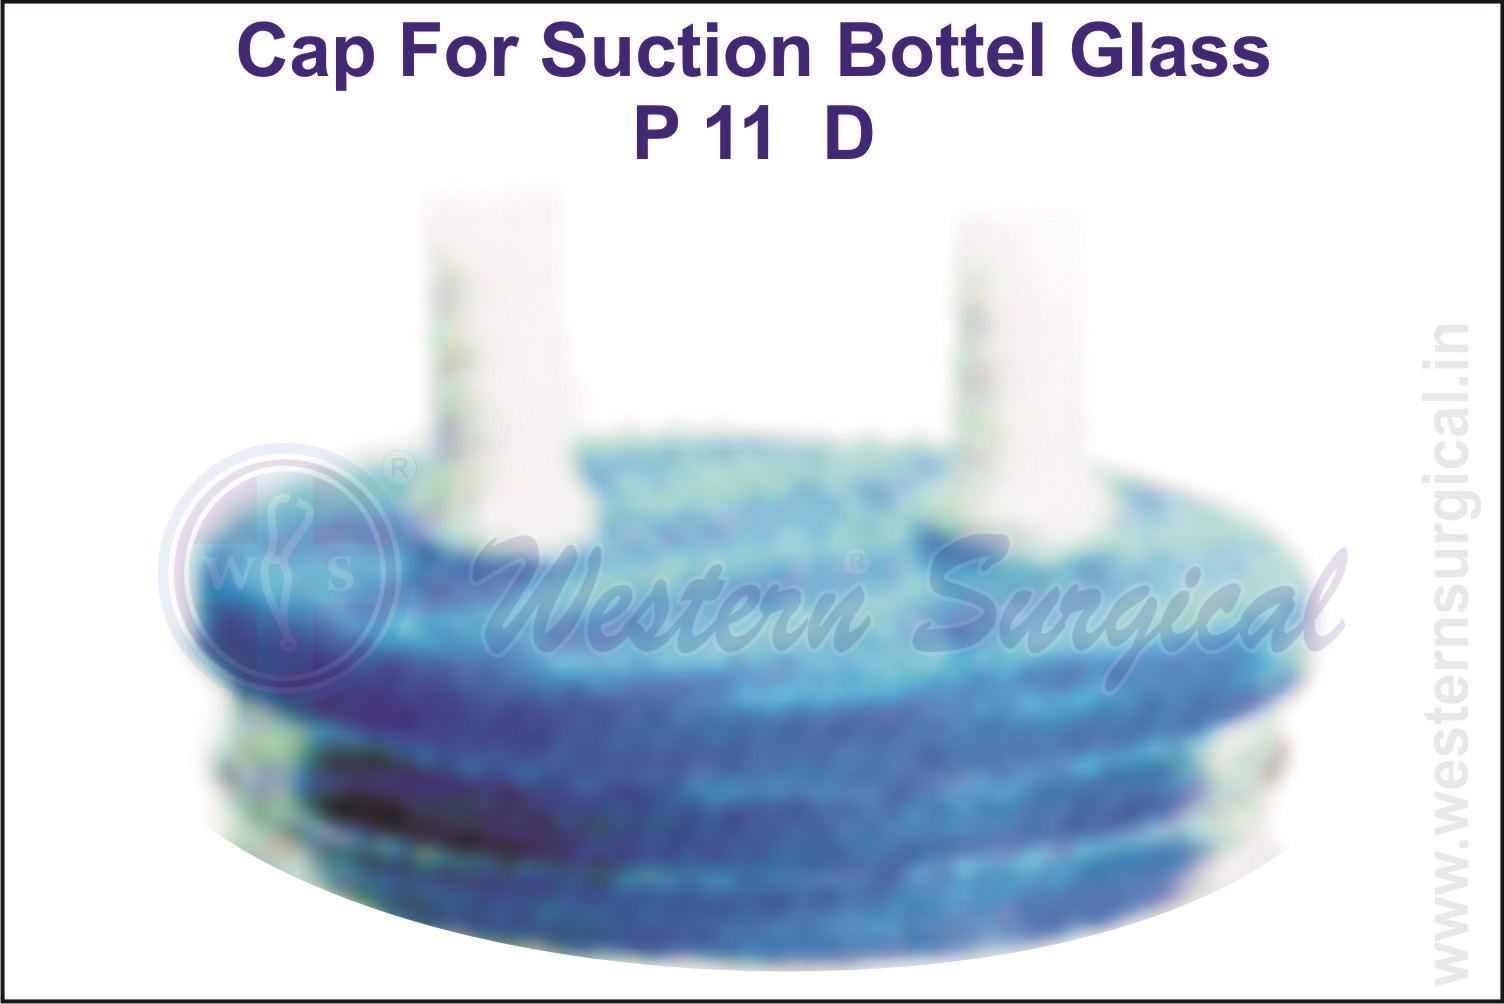 CAPS FOR SUCTION BOTTEL GLASS